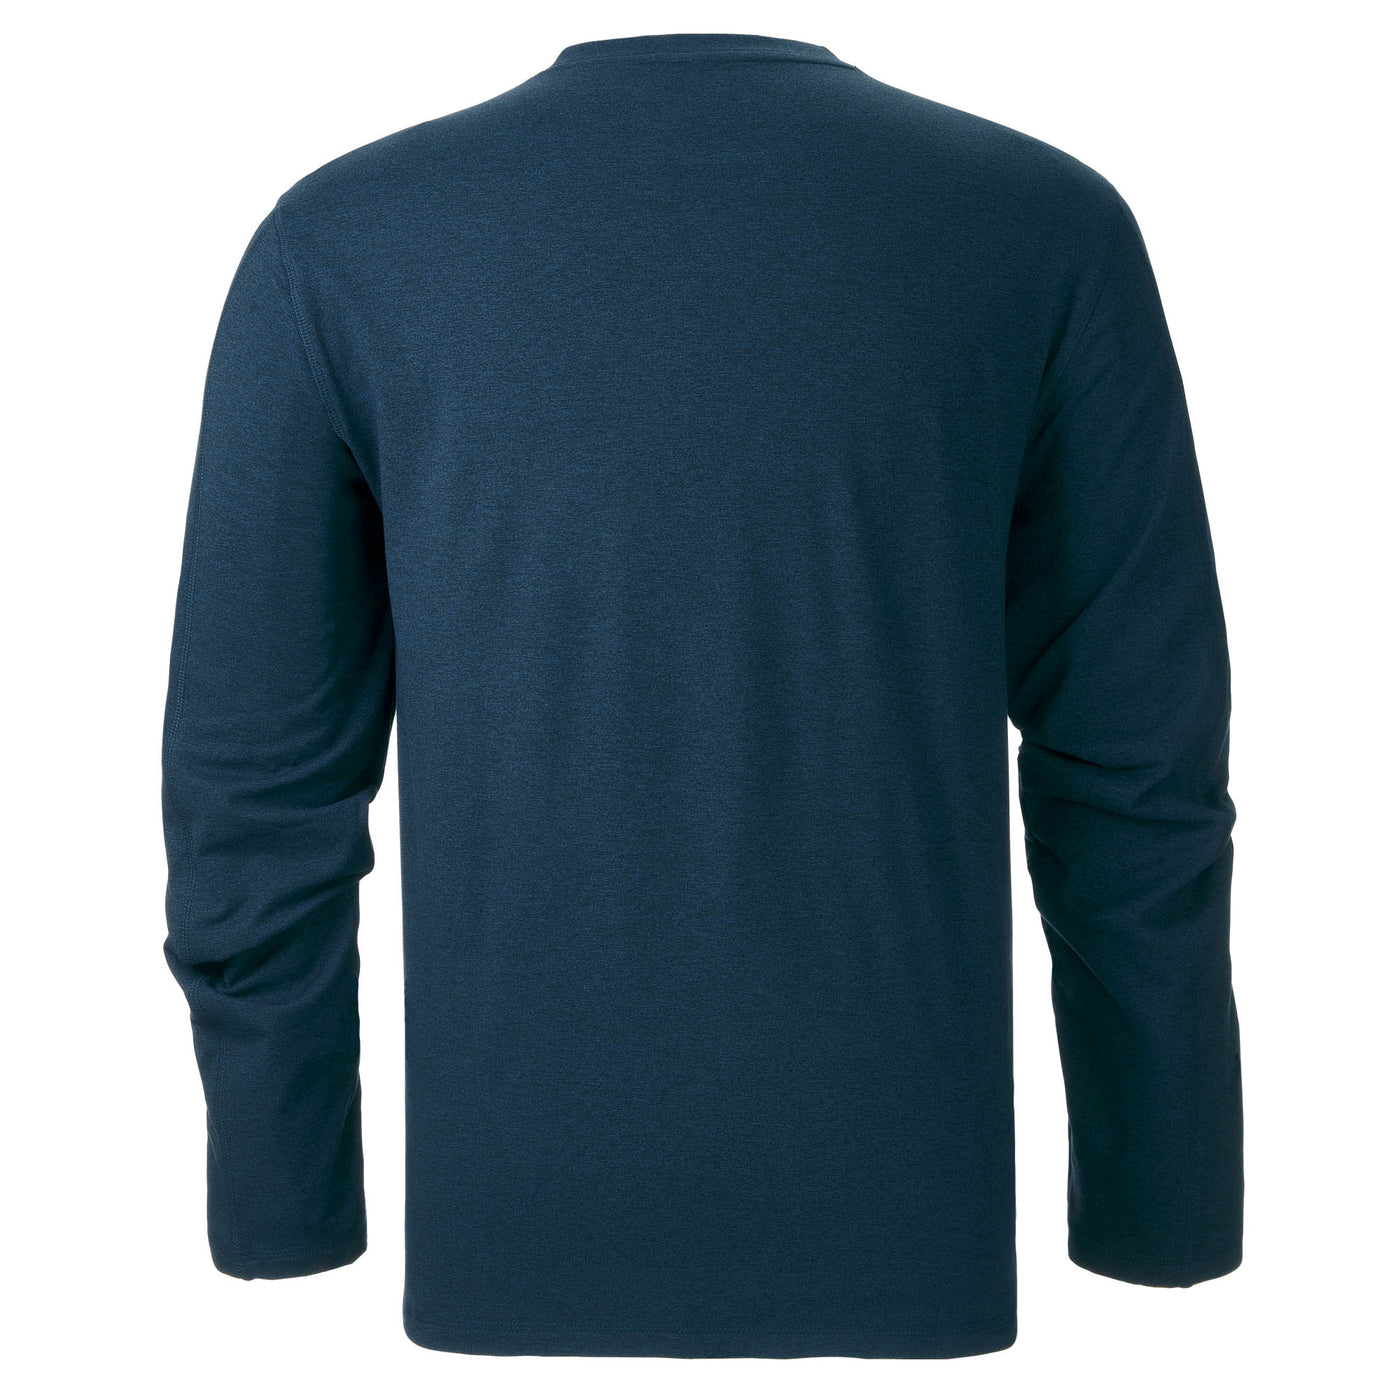 X Stitch Performance Long-Sleeve Crewneck Shirt